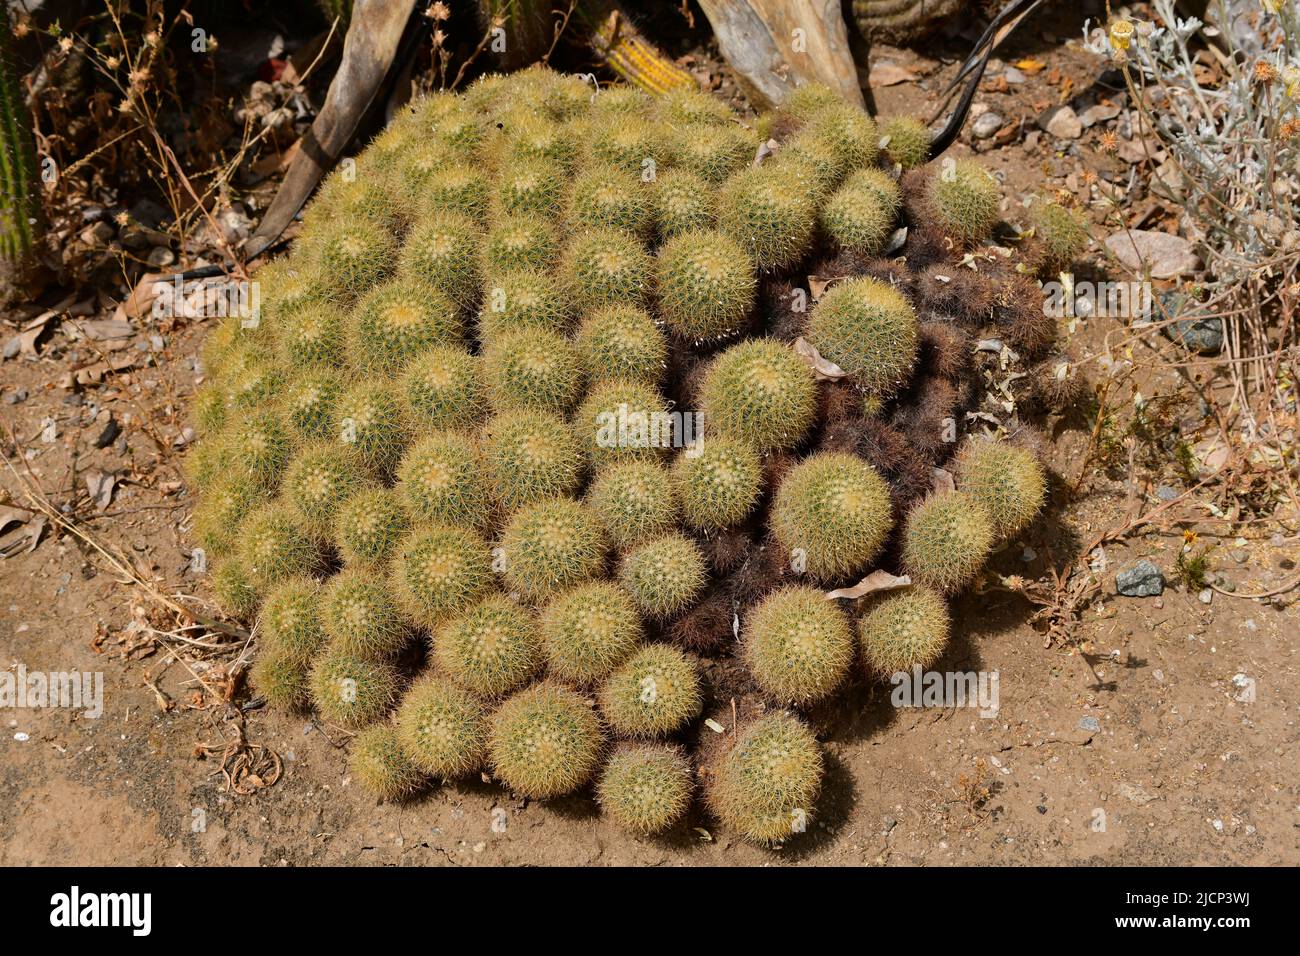 Kugelkakteen - barrel cacti Stock Photo